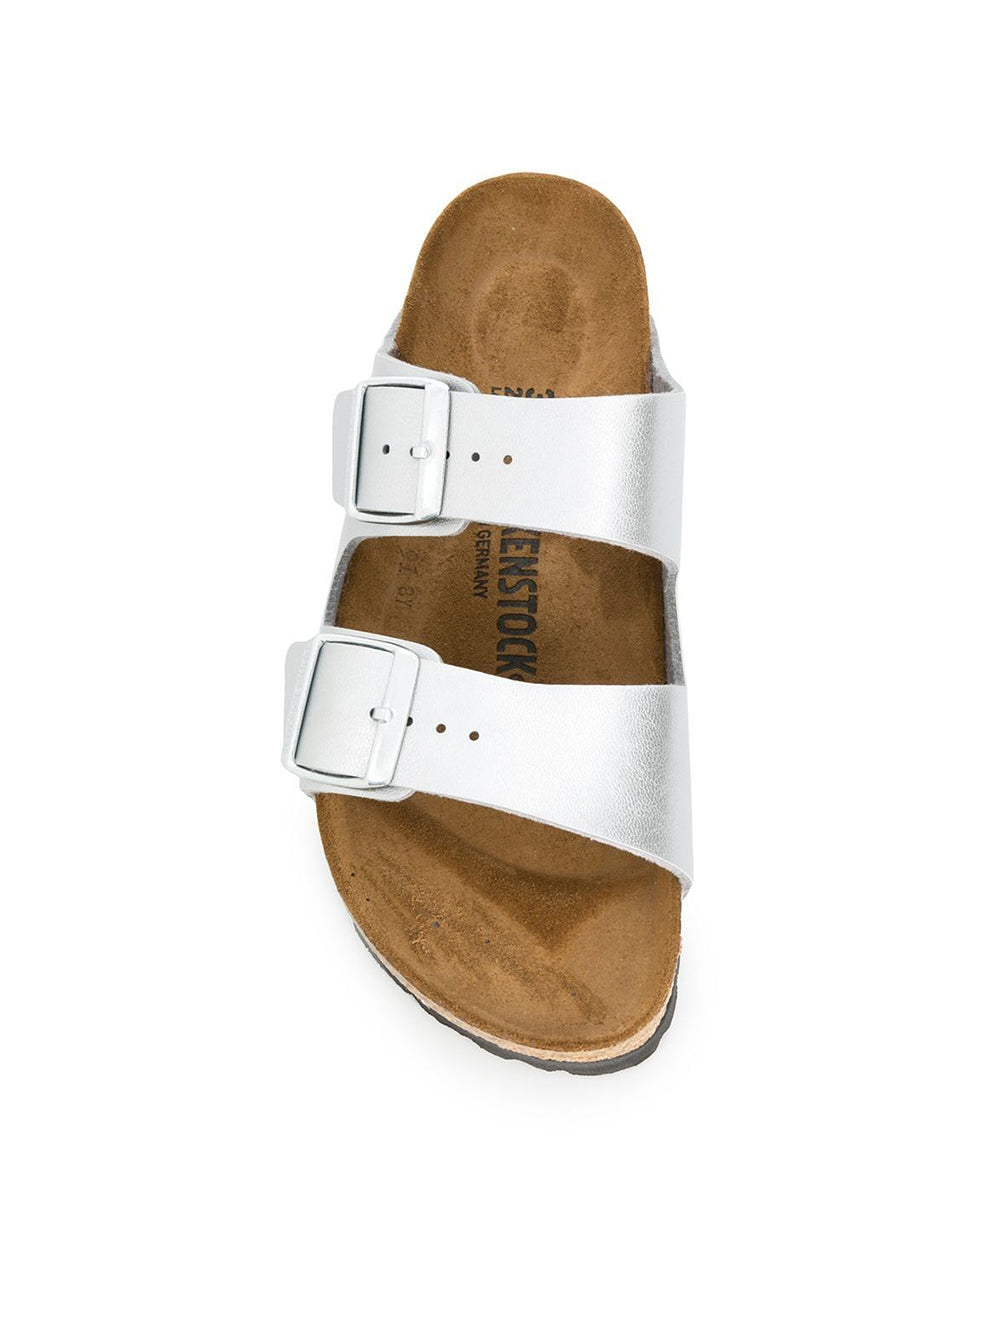 Arizona Birkibuc Silver Sandal W